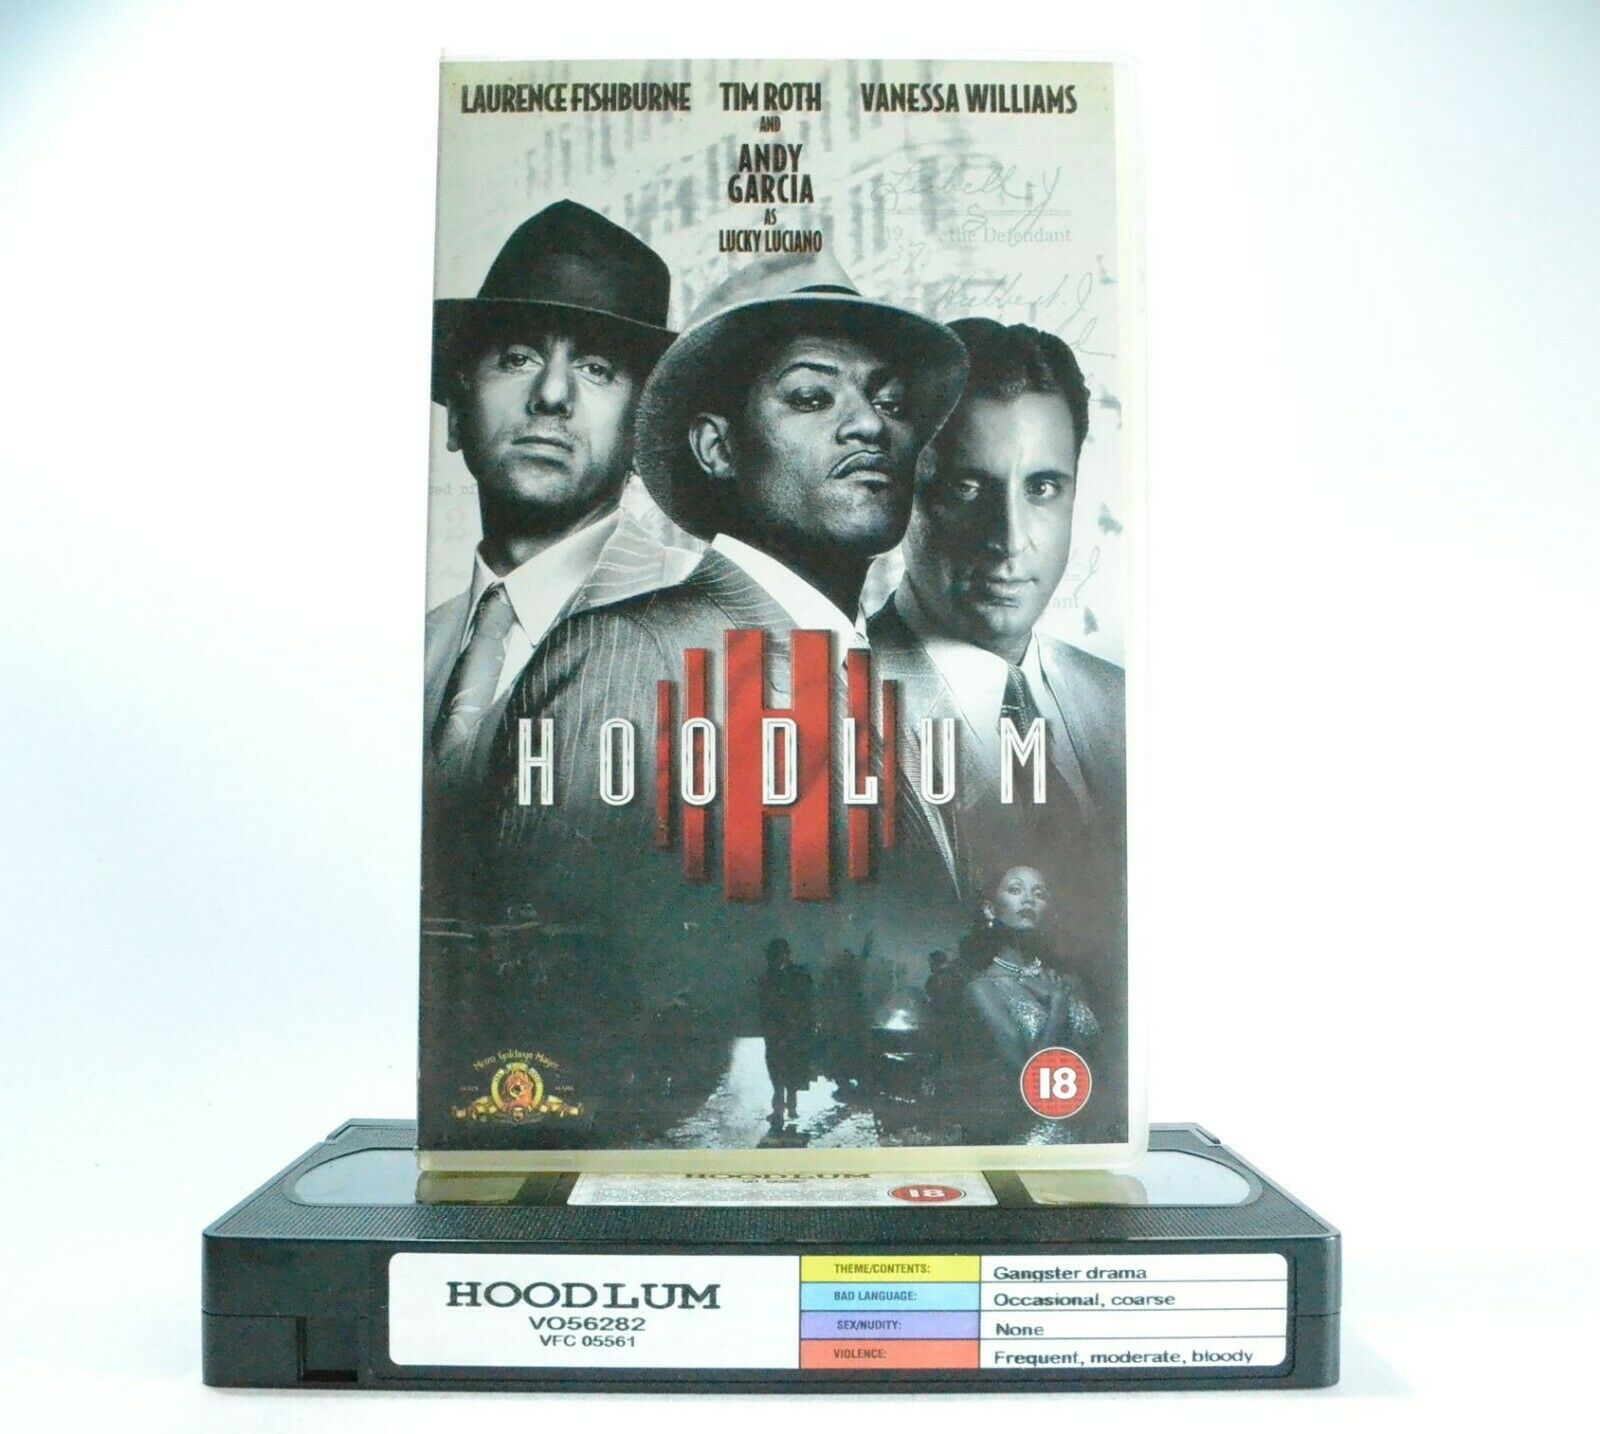 Hoodlum: Crime Drama (1997) - Large Box - Italian/Jewish Mafia Gang War - VHS-